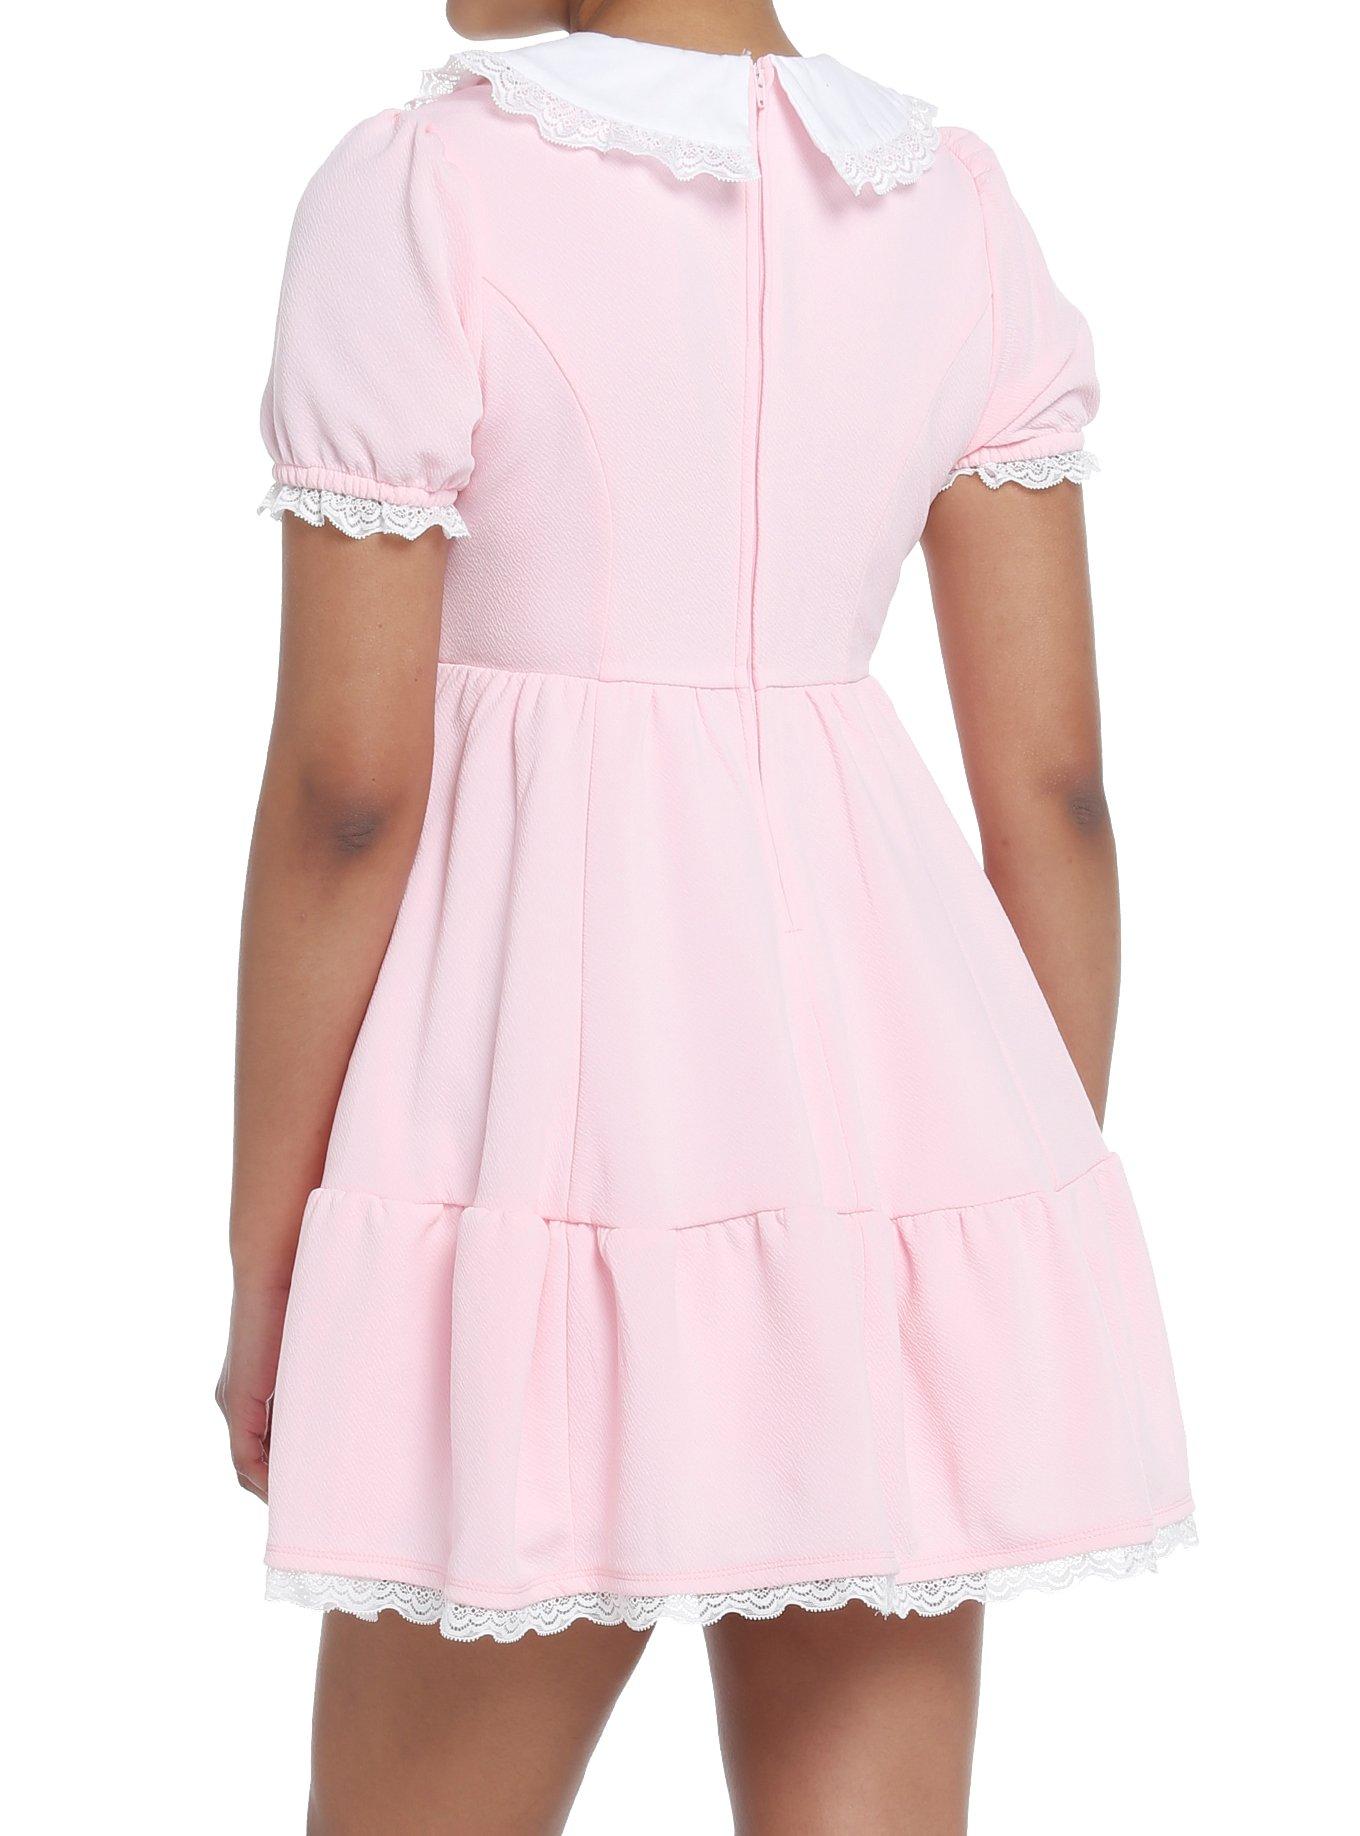 Sweet Society Pink Collared Dress, PINK, alternate